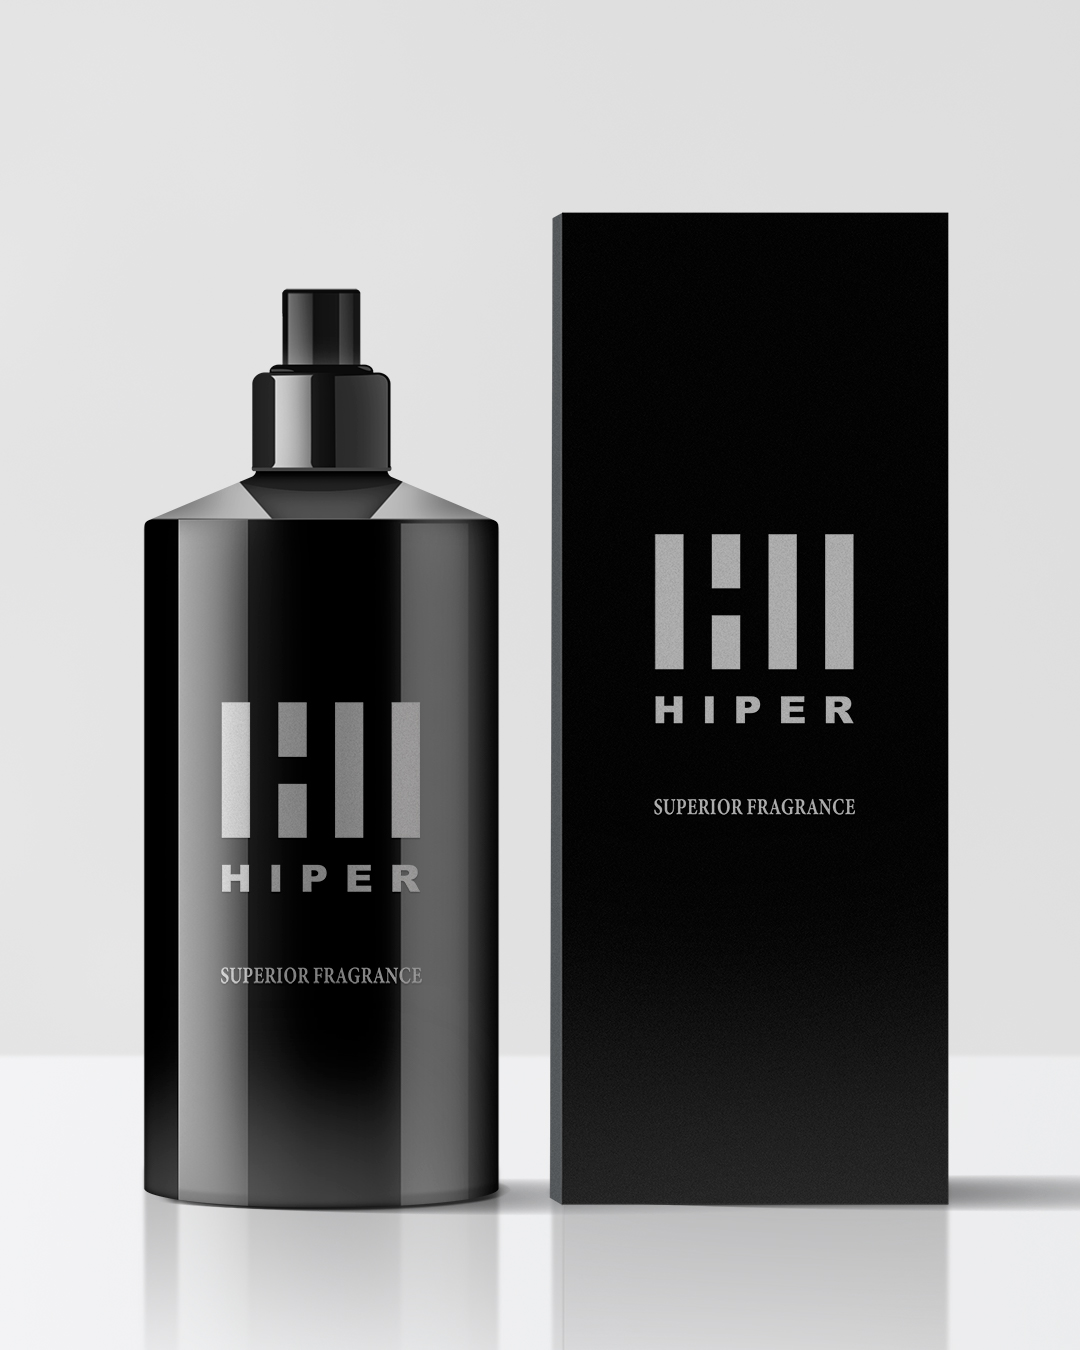 HIPER Superior Fragrance Brand Project